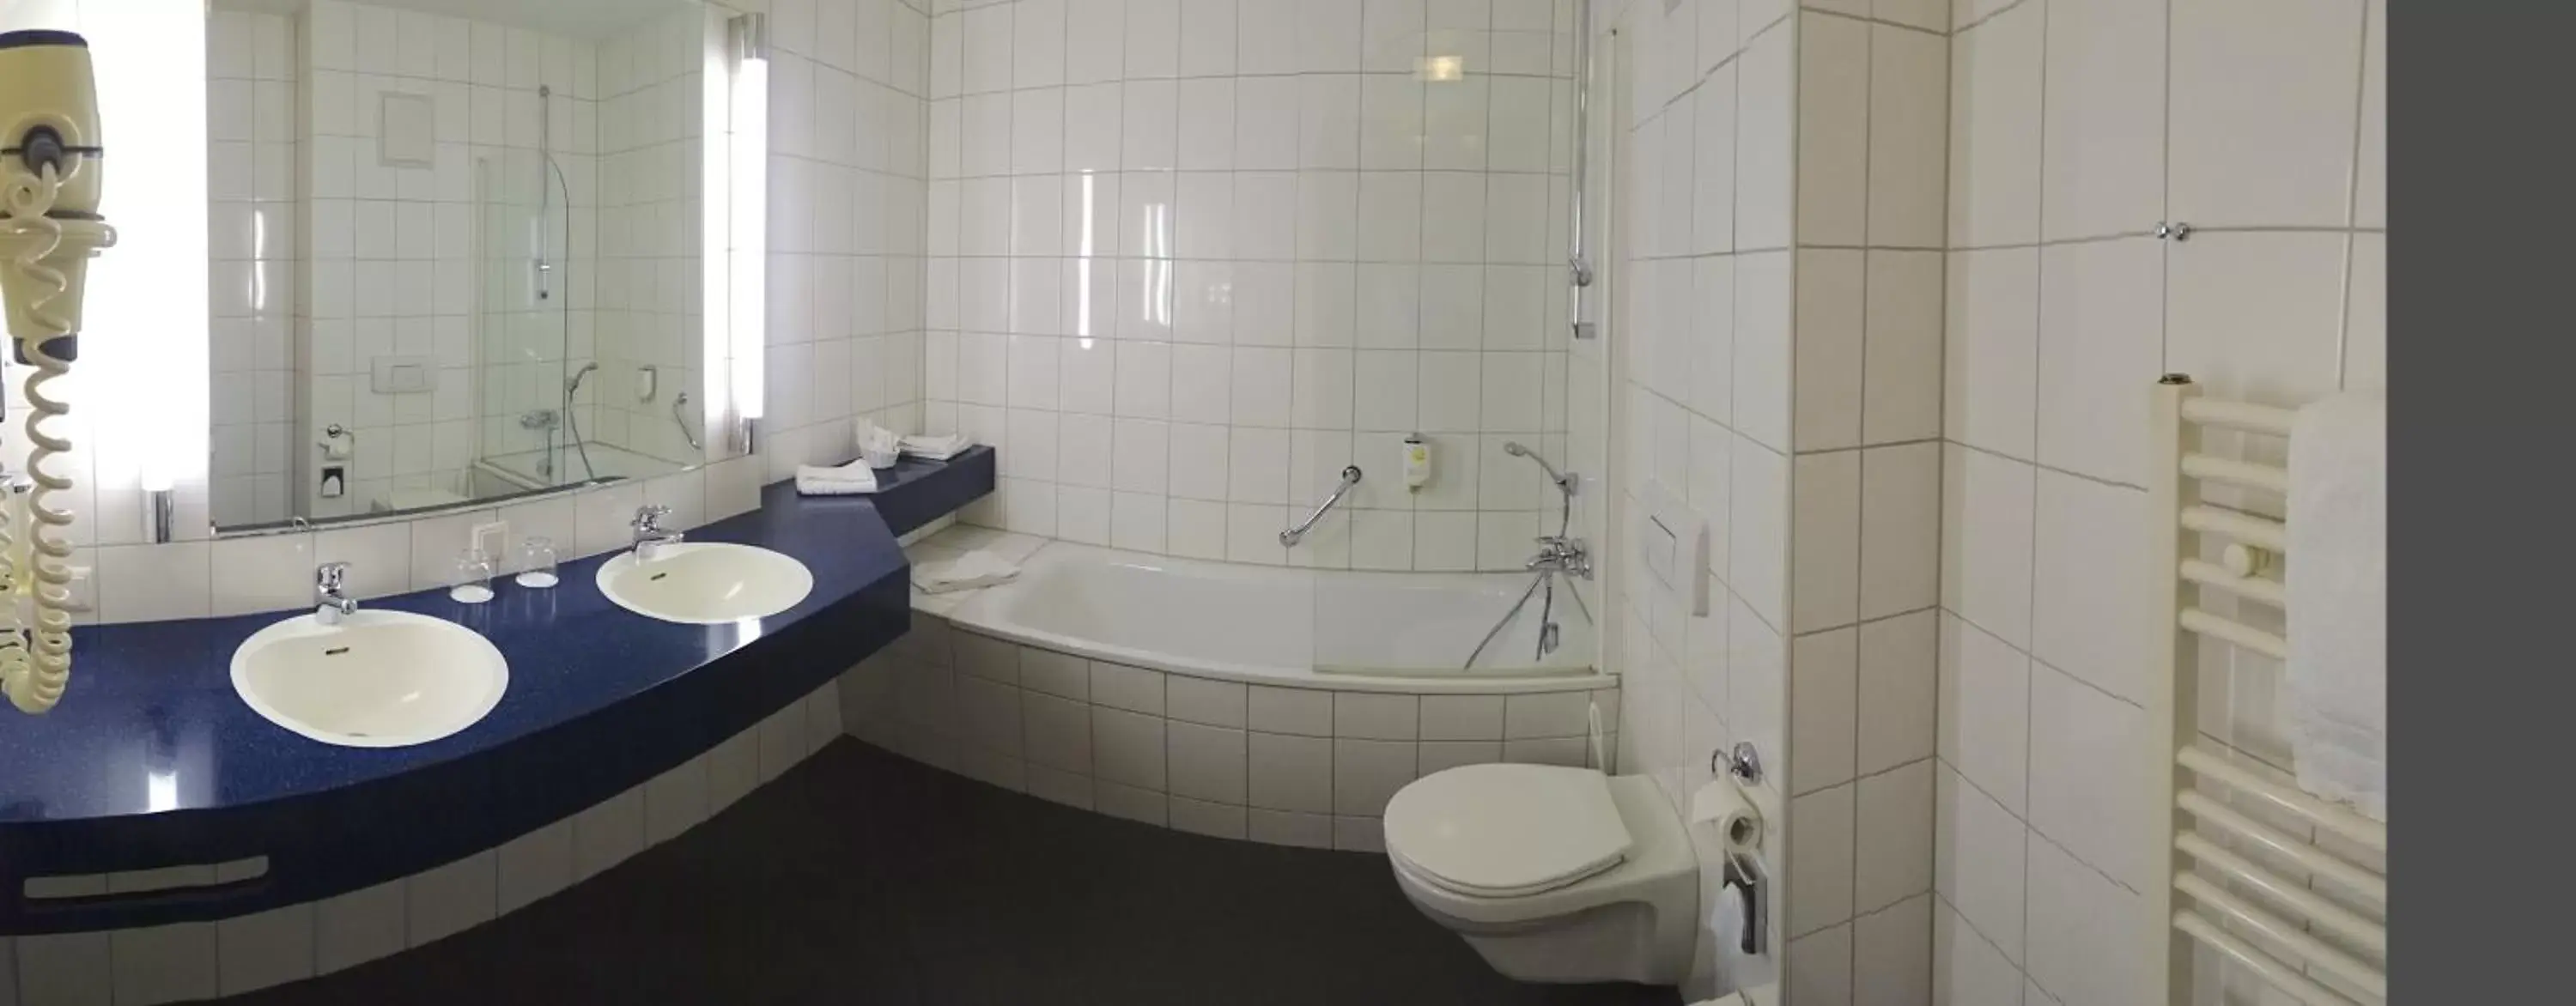 Bathroom in Hotel Ascot Bristol